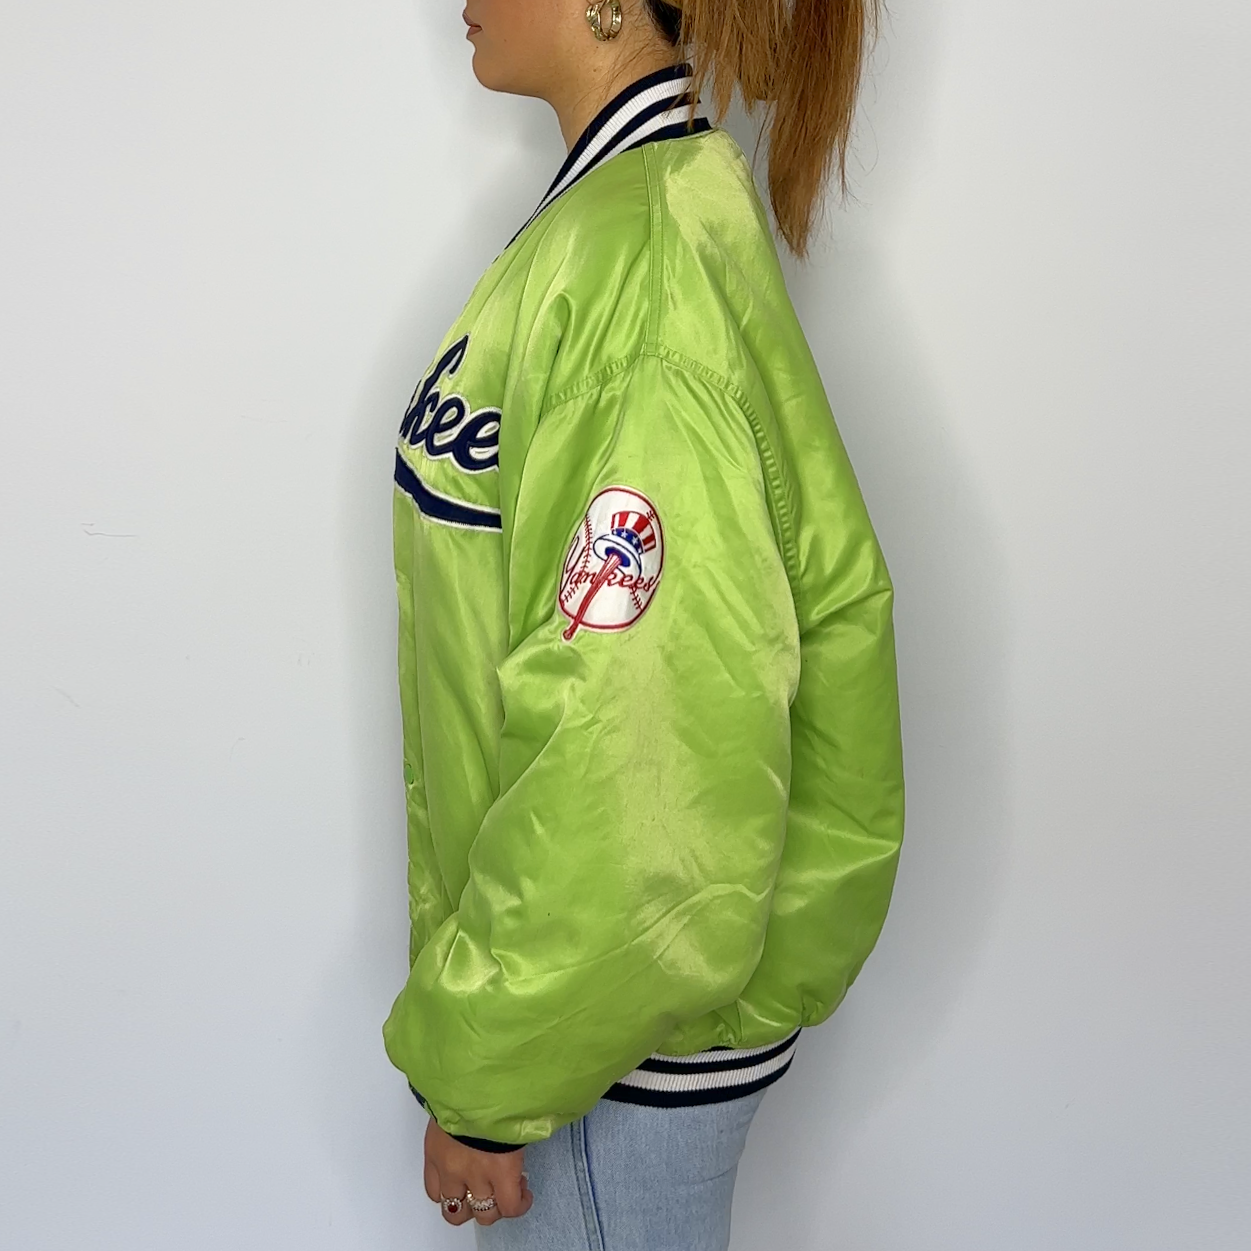 New York Yankees Starter Jacket | Lime Green